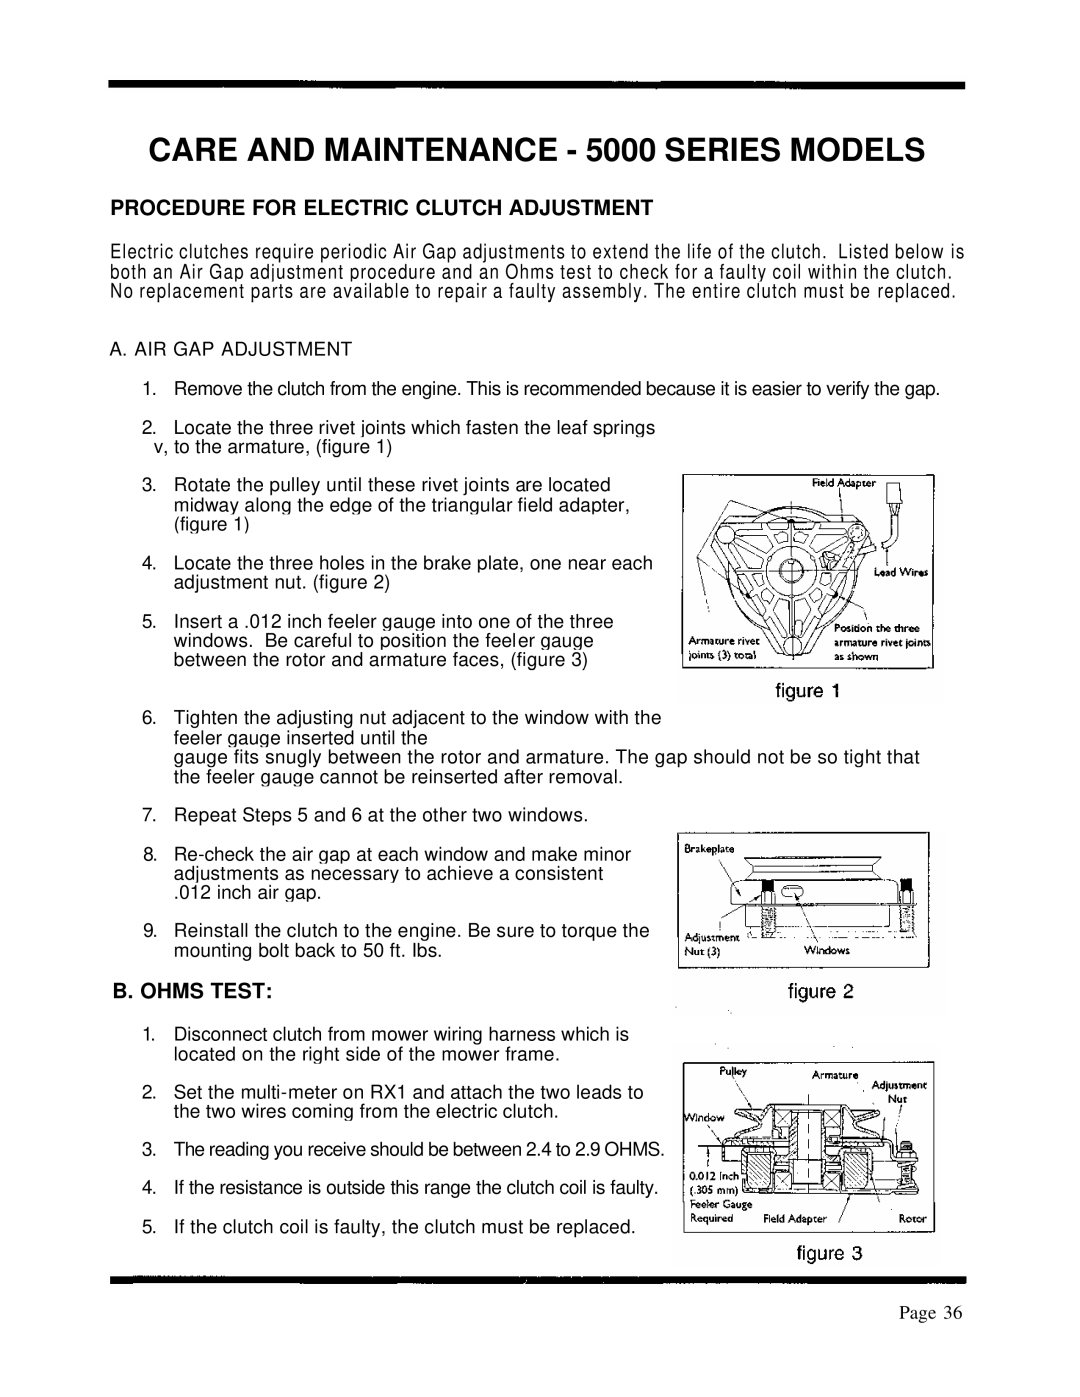 Dixon ZTR 5422, ZTR 5502 CARE AND MAINTENANCE - 5000 SERIES MODELS, Procedure For Electric Clutch Adjustment, B. Ohms Test 